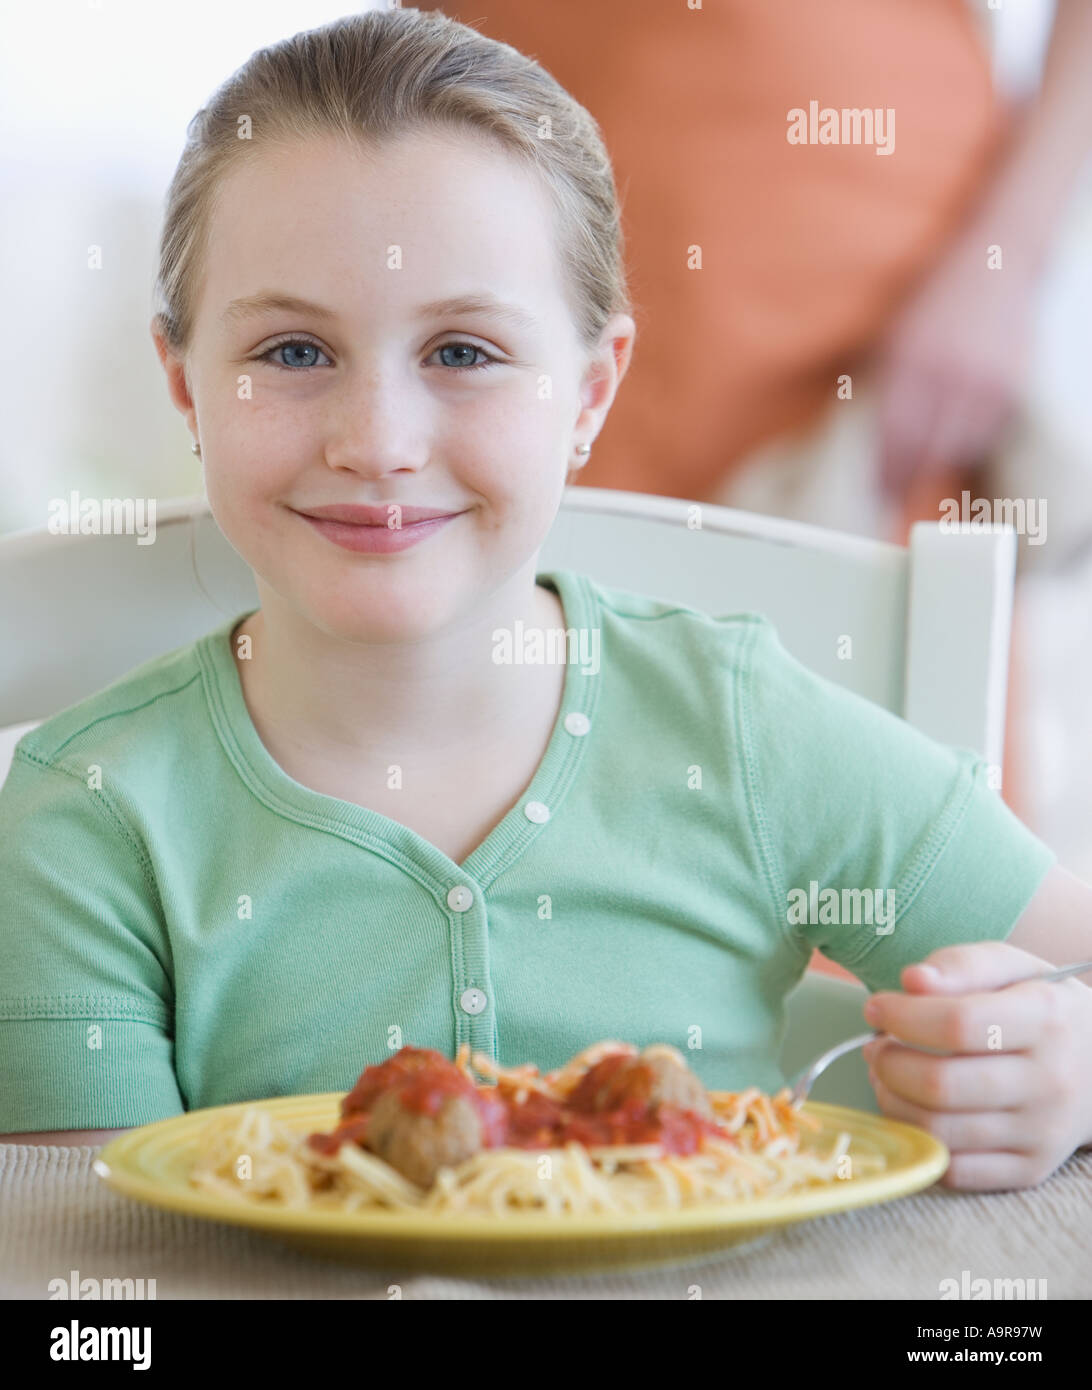 Girl eating spaghetti and meatballs Stock Photo